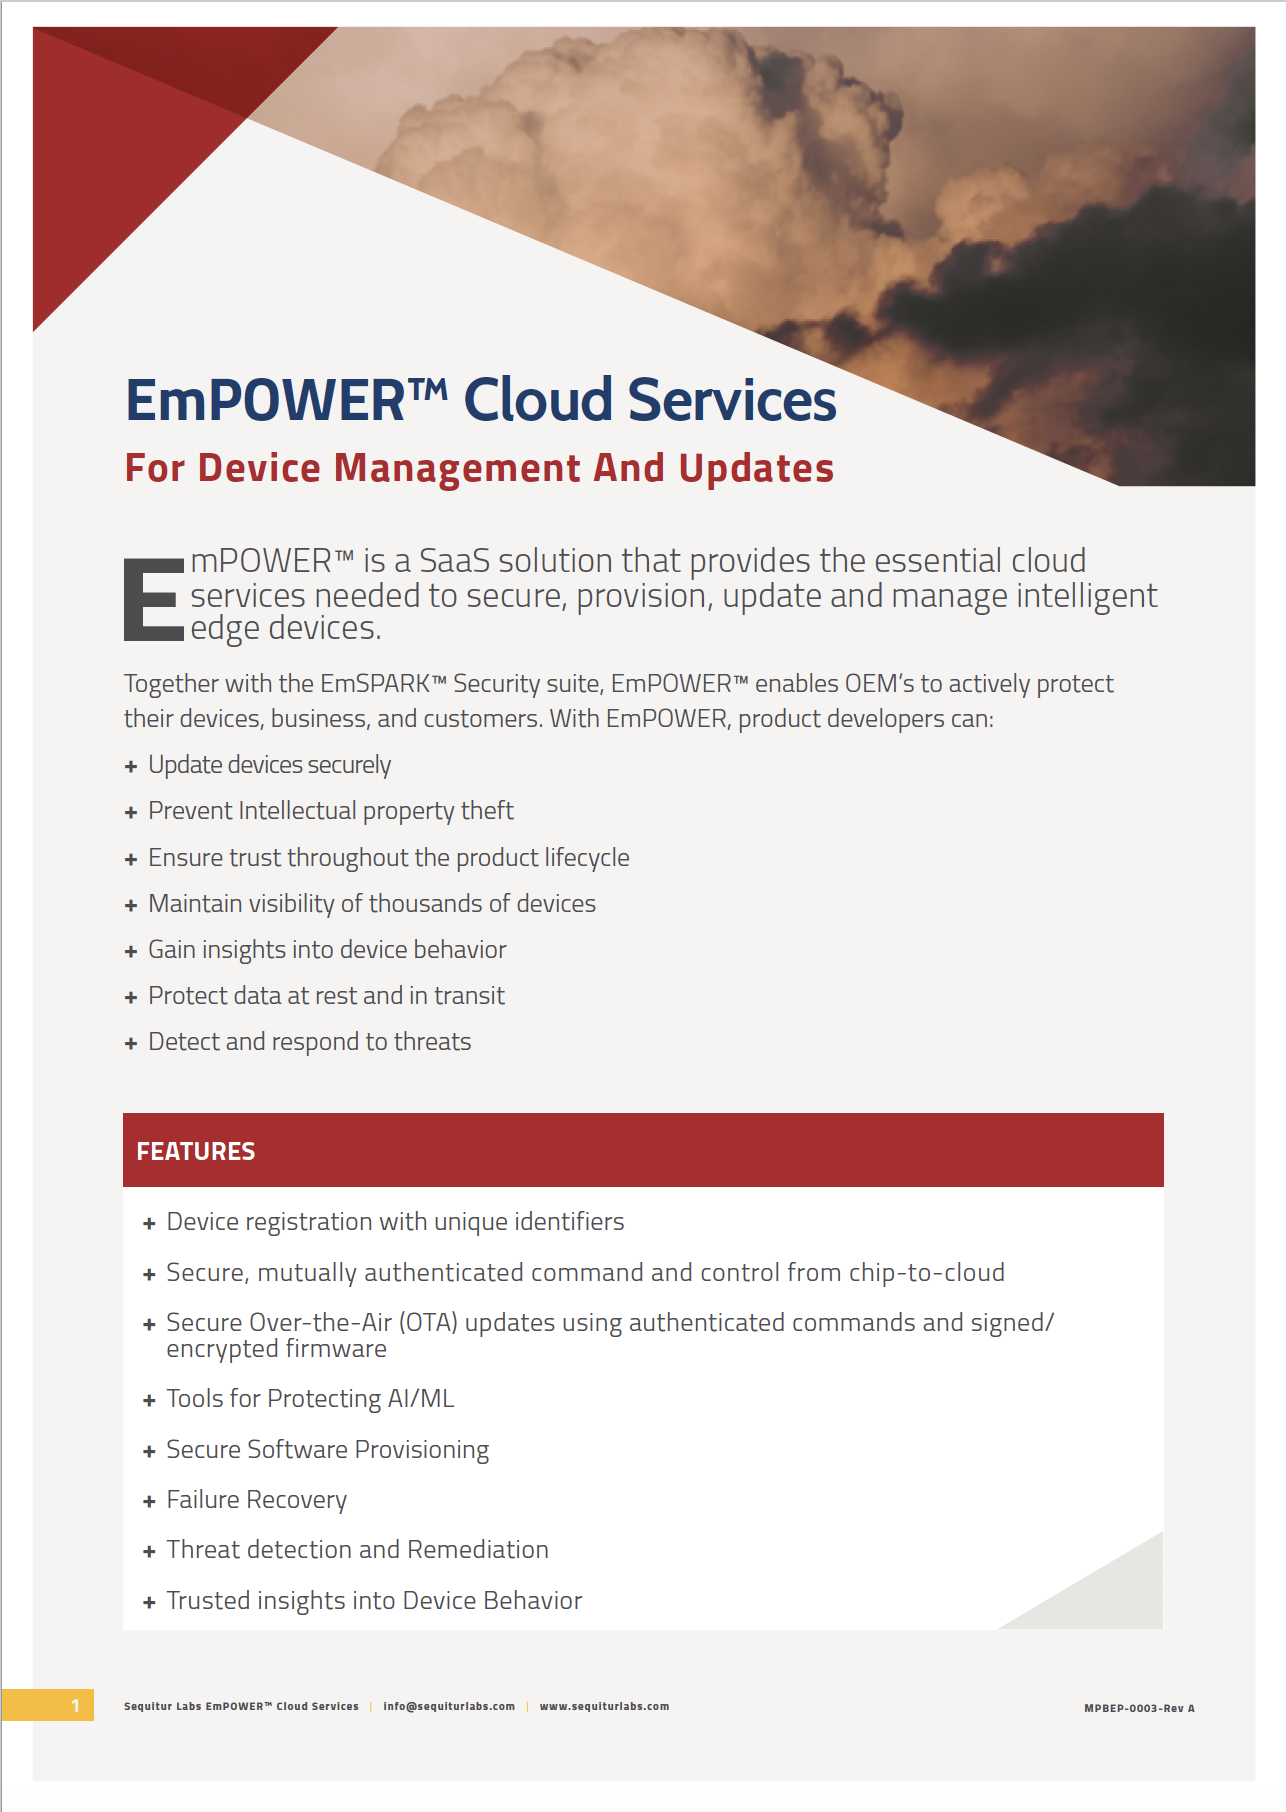 EmPOWER™ Cloud Services Brochure